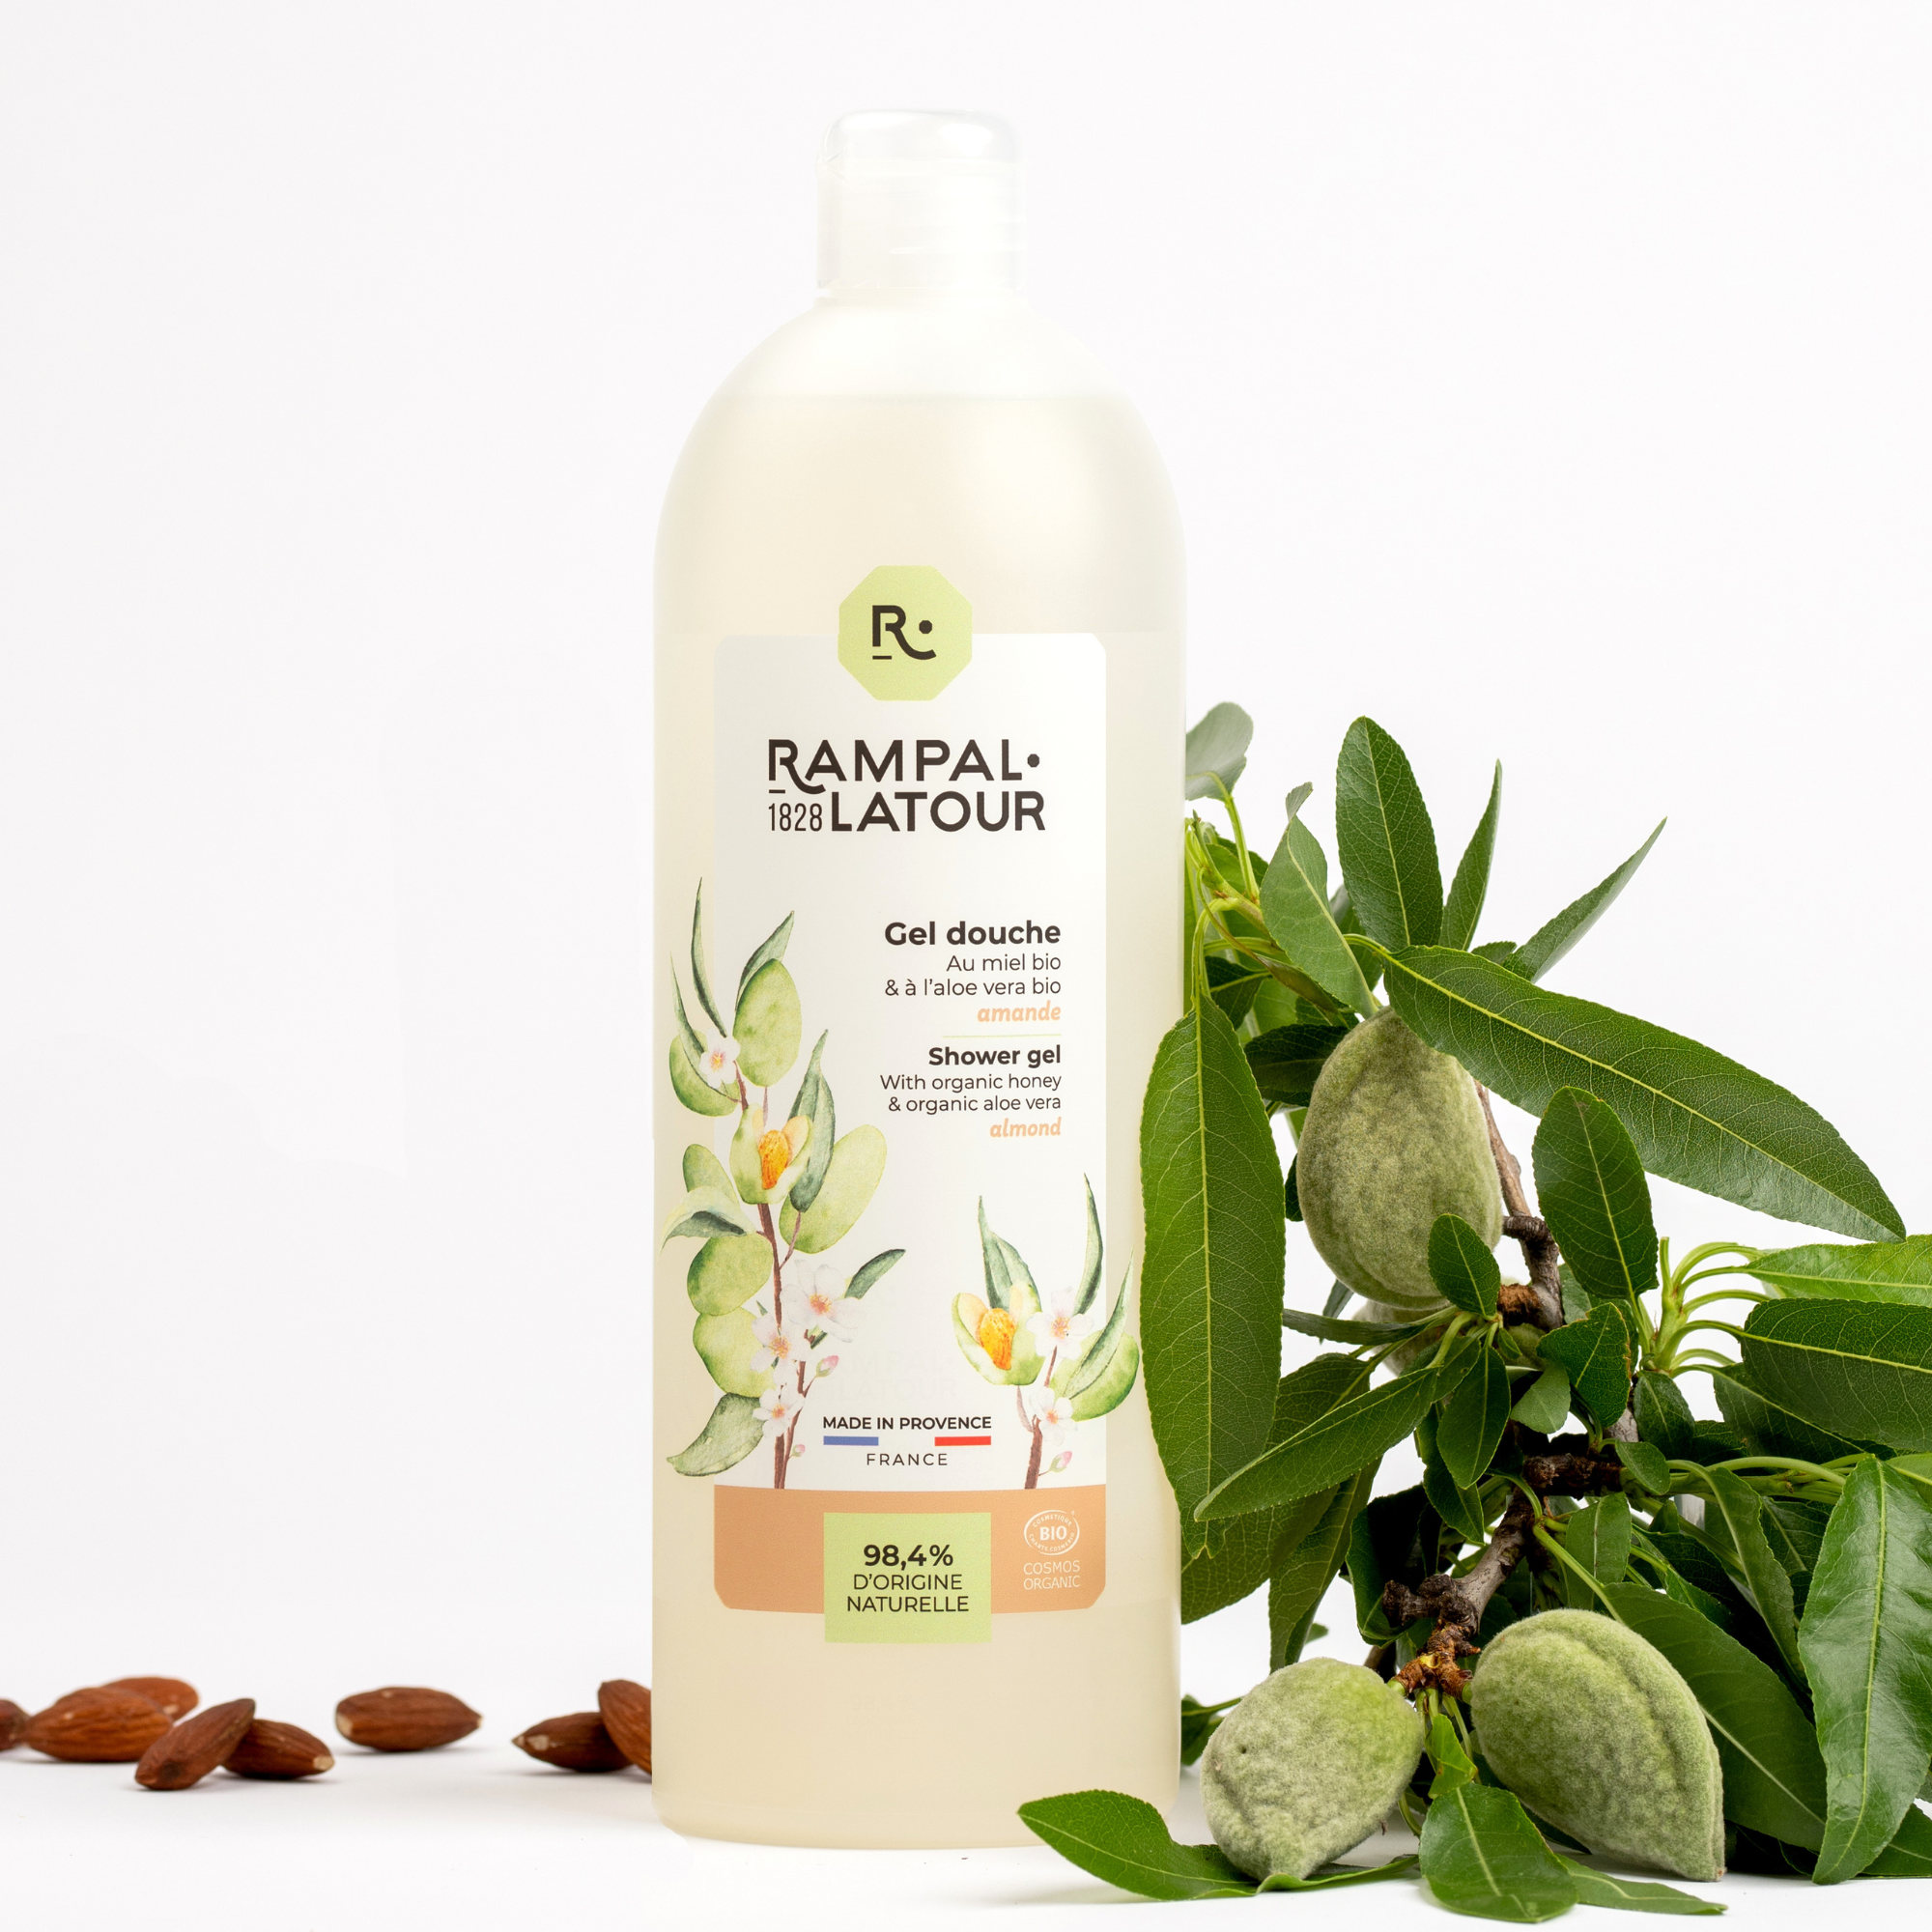 Shower gel certified organic Almond 1L - Cosmos Organic